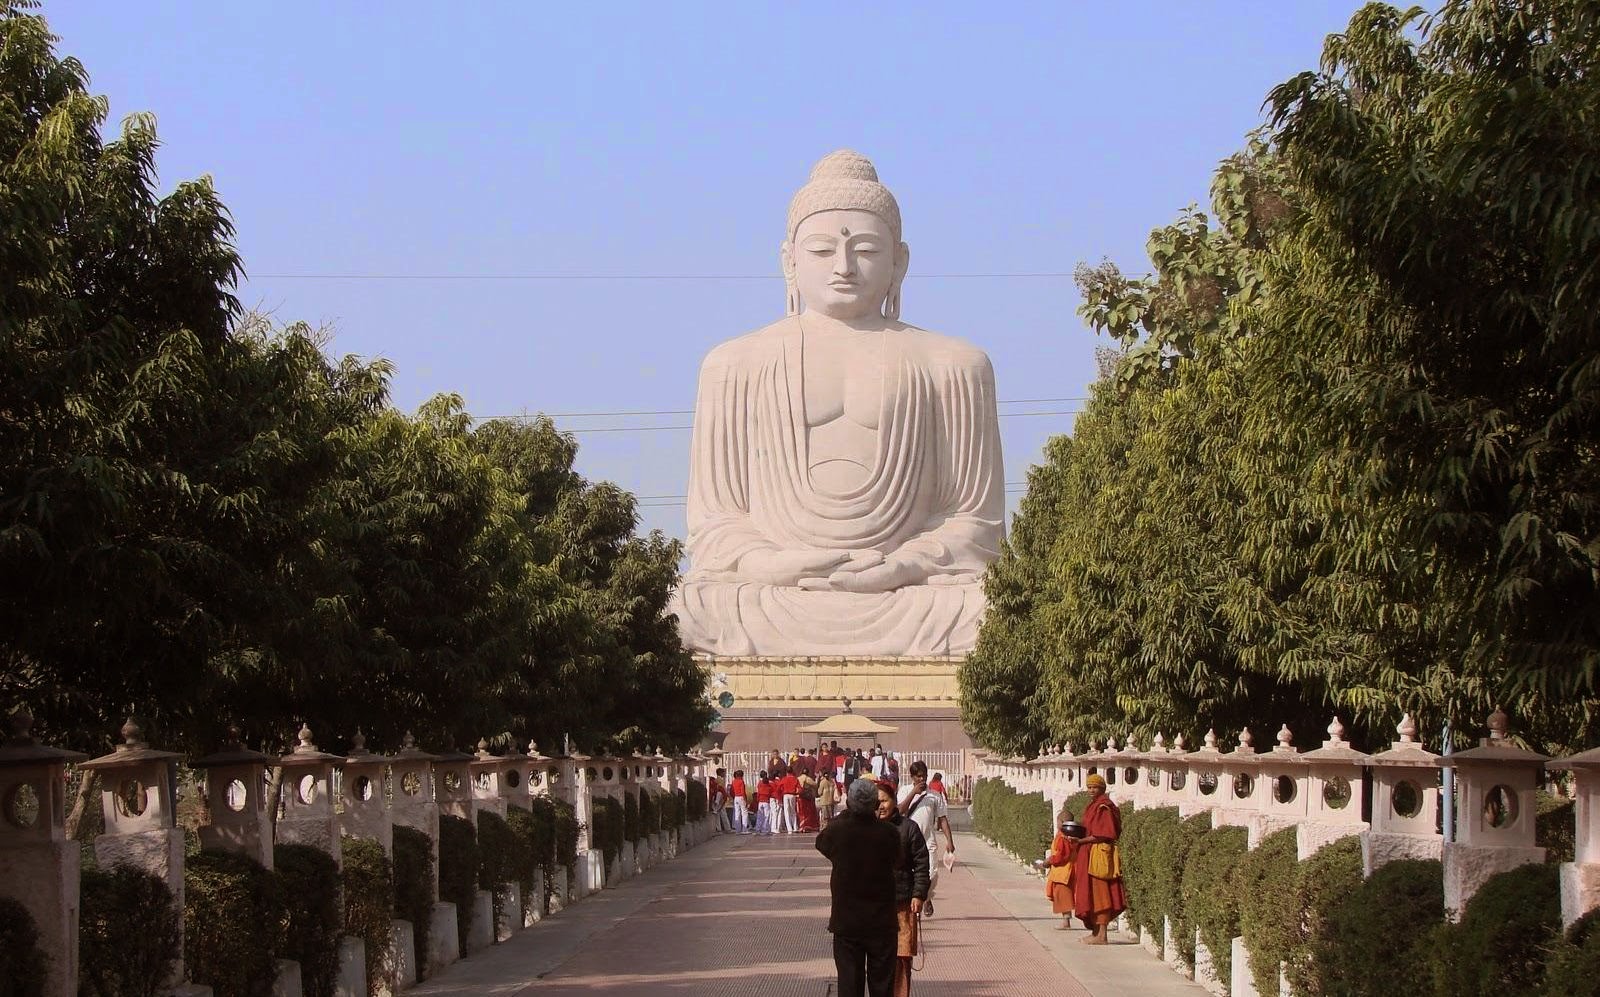 The Giant Buddha statue